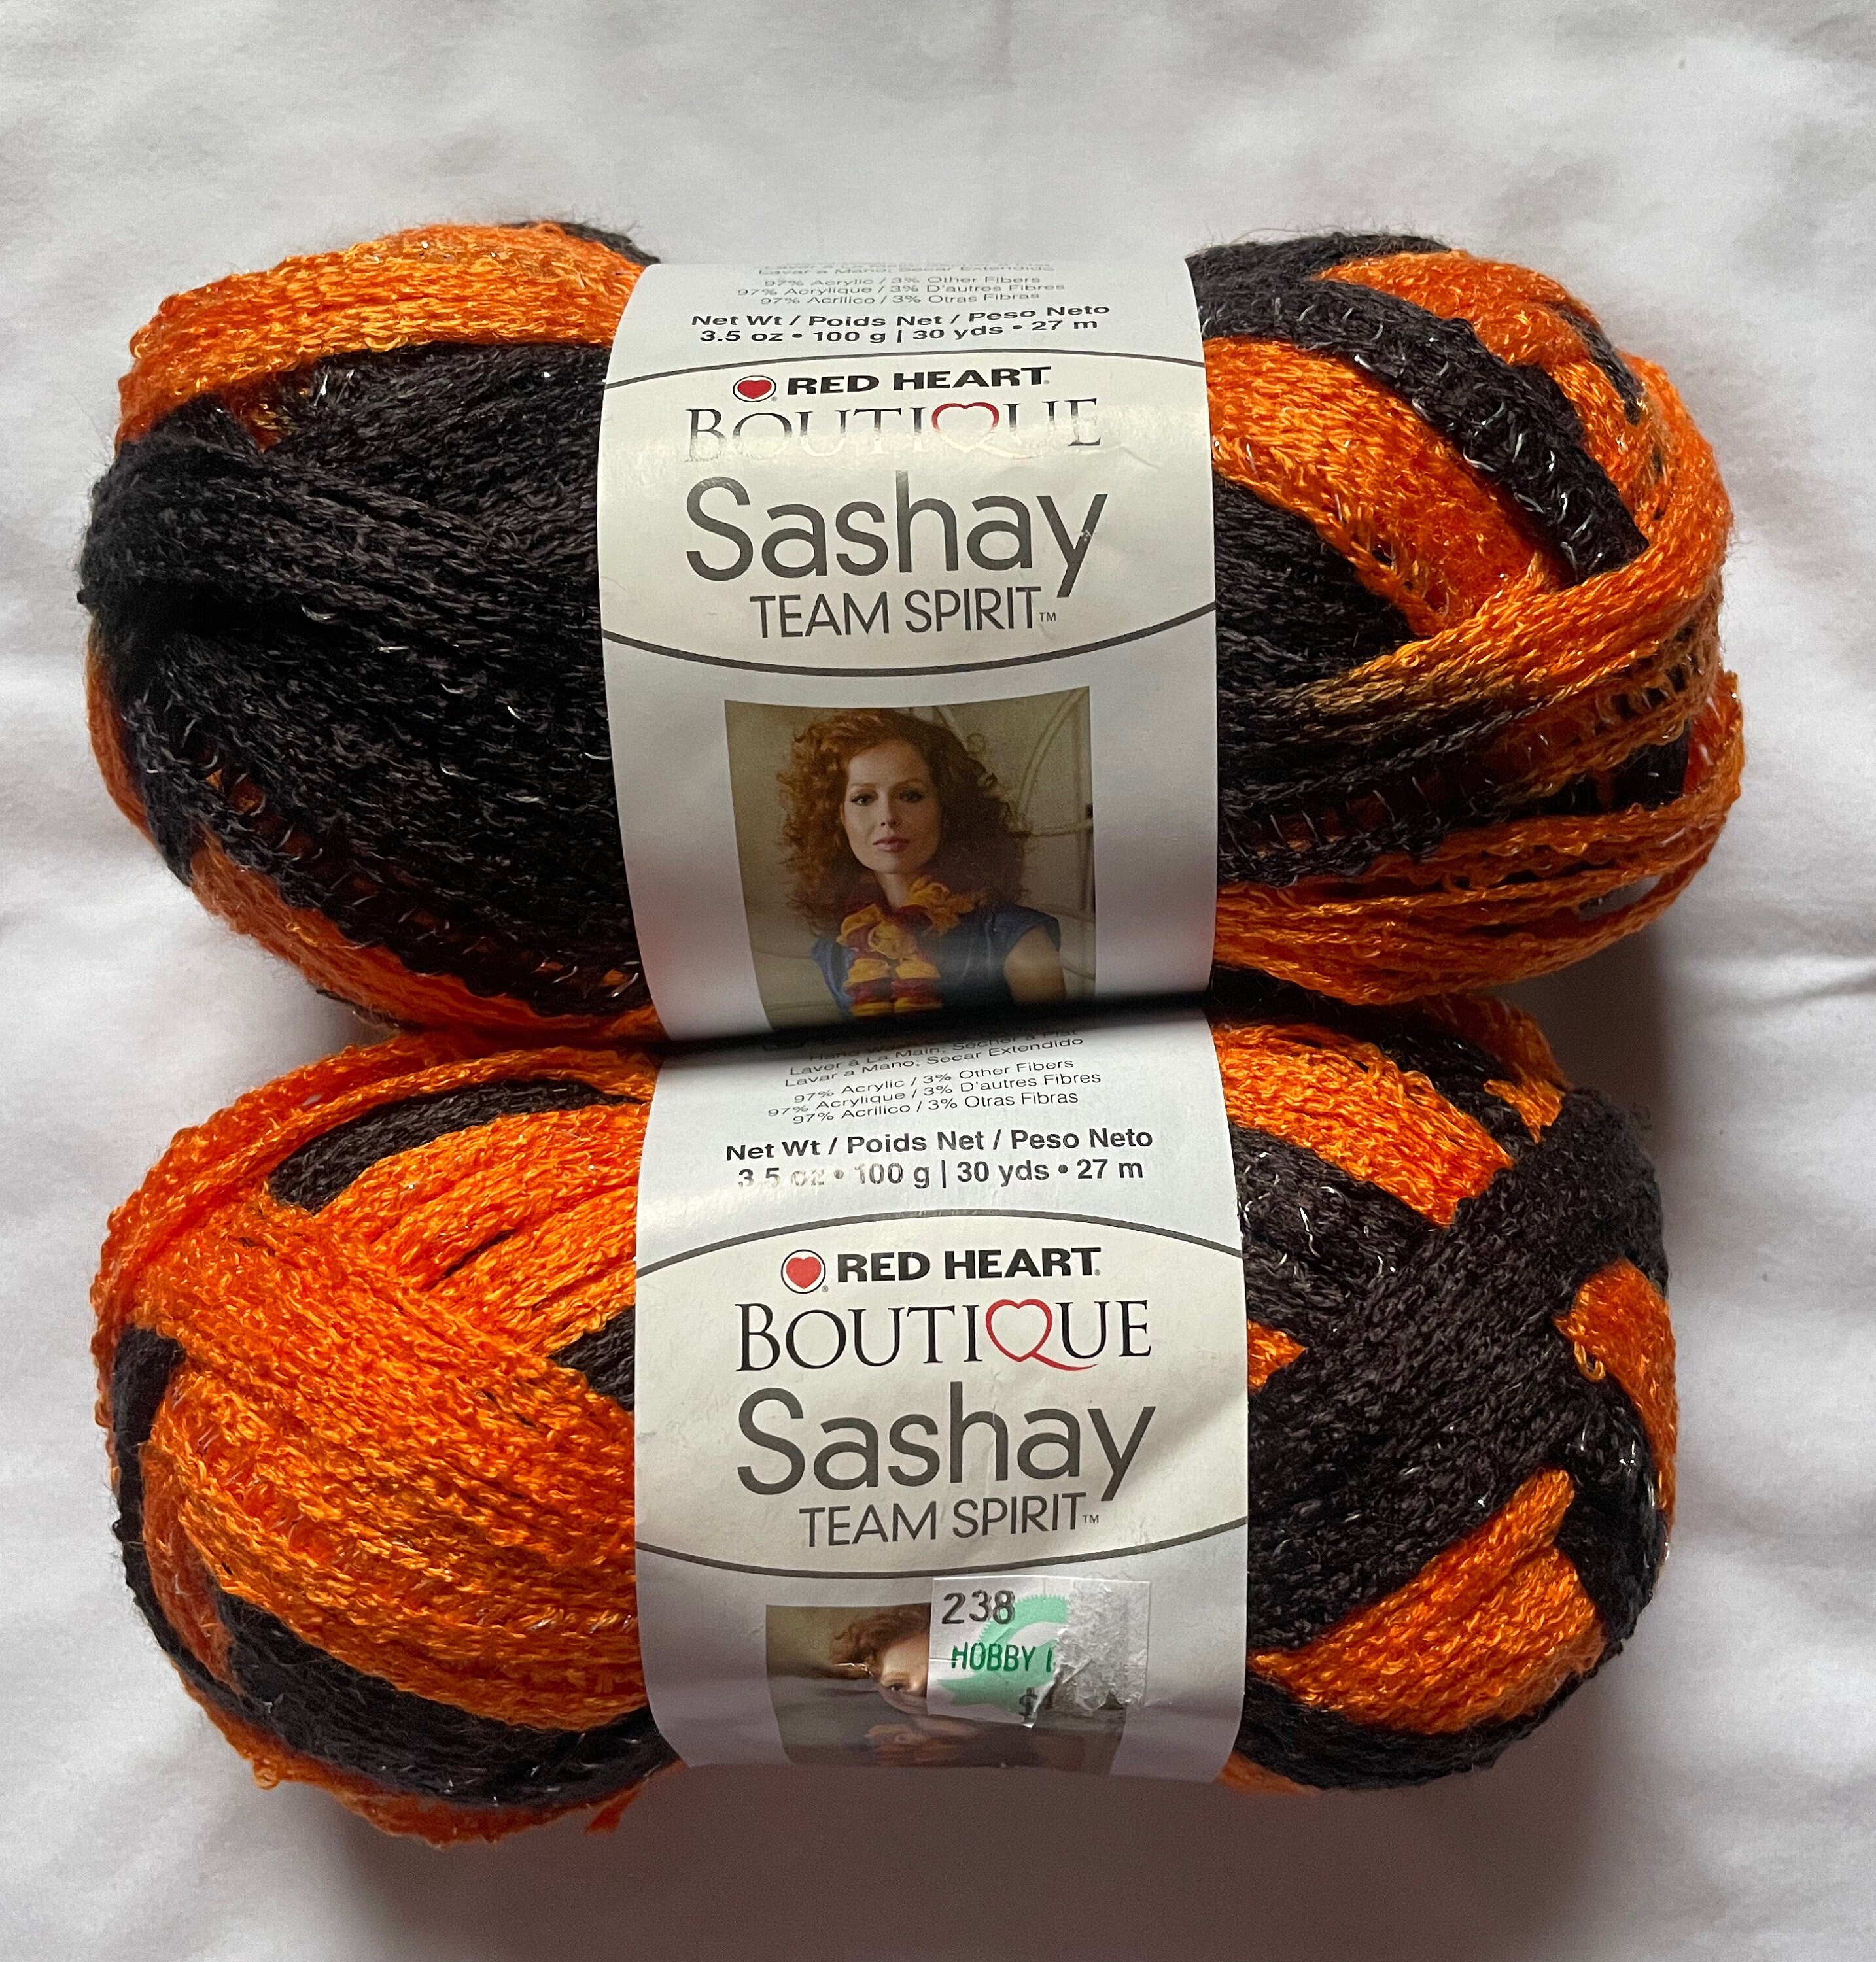 Red Heart Team Spirit Orange & Black Knitting and Crochet Yarn